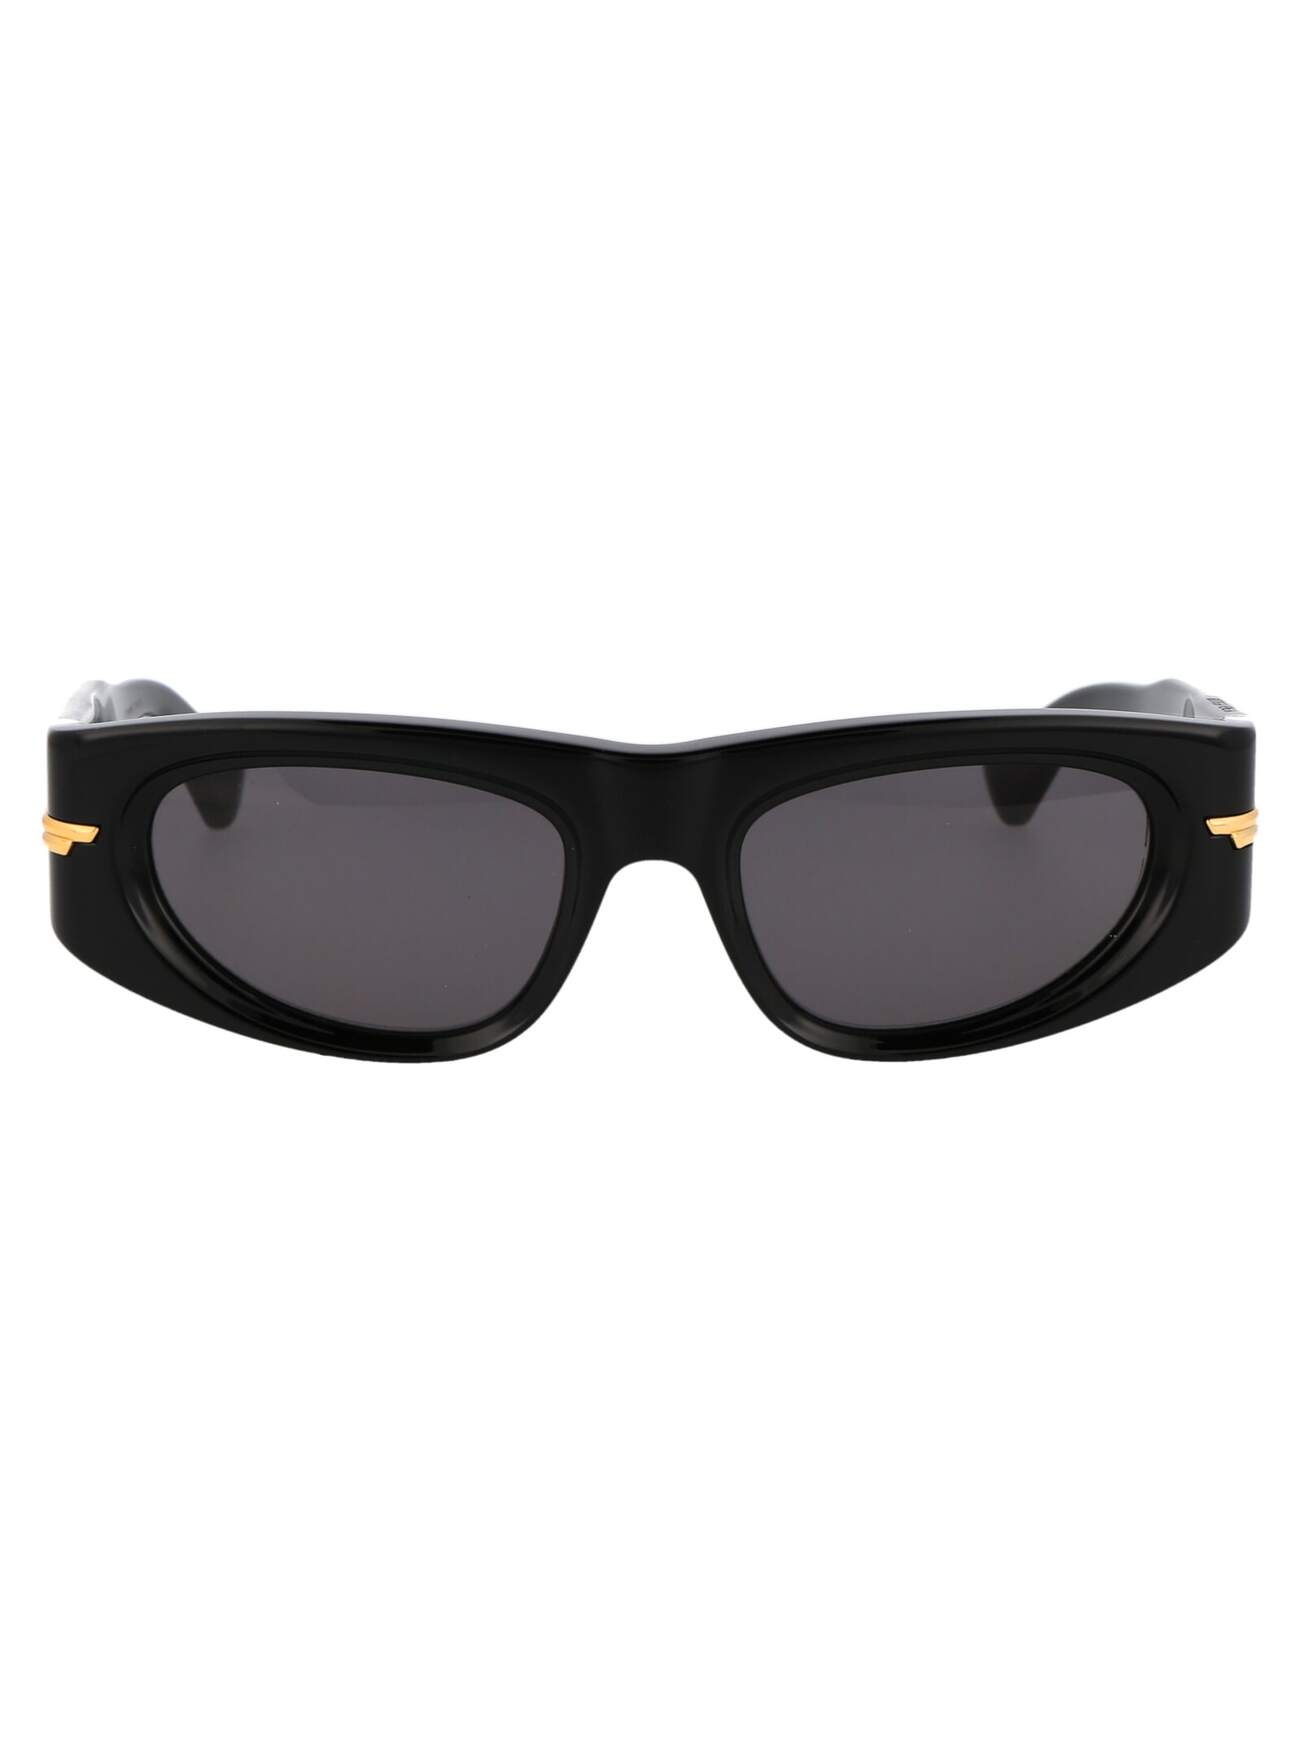 Bottega Veneta Eyewear Bv1144s Sunglasses in black / grey